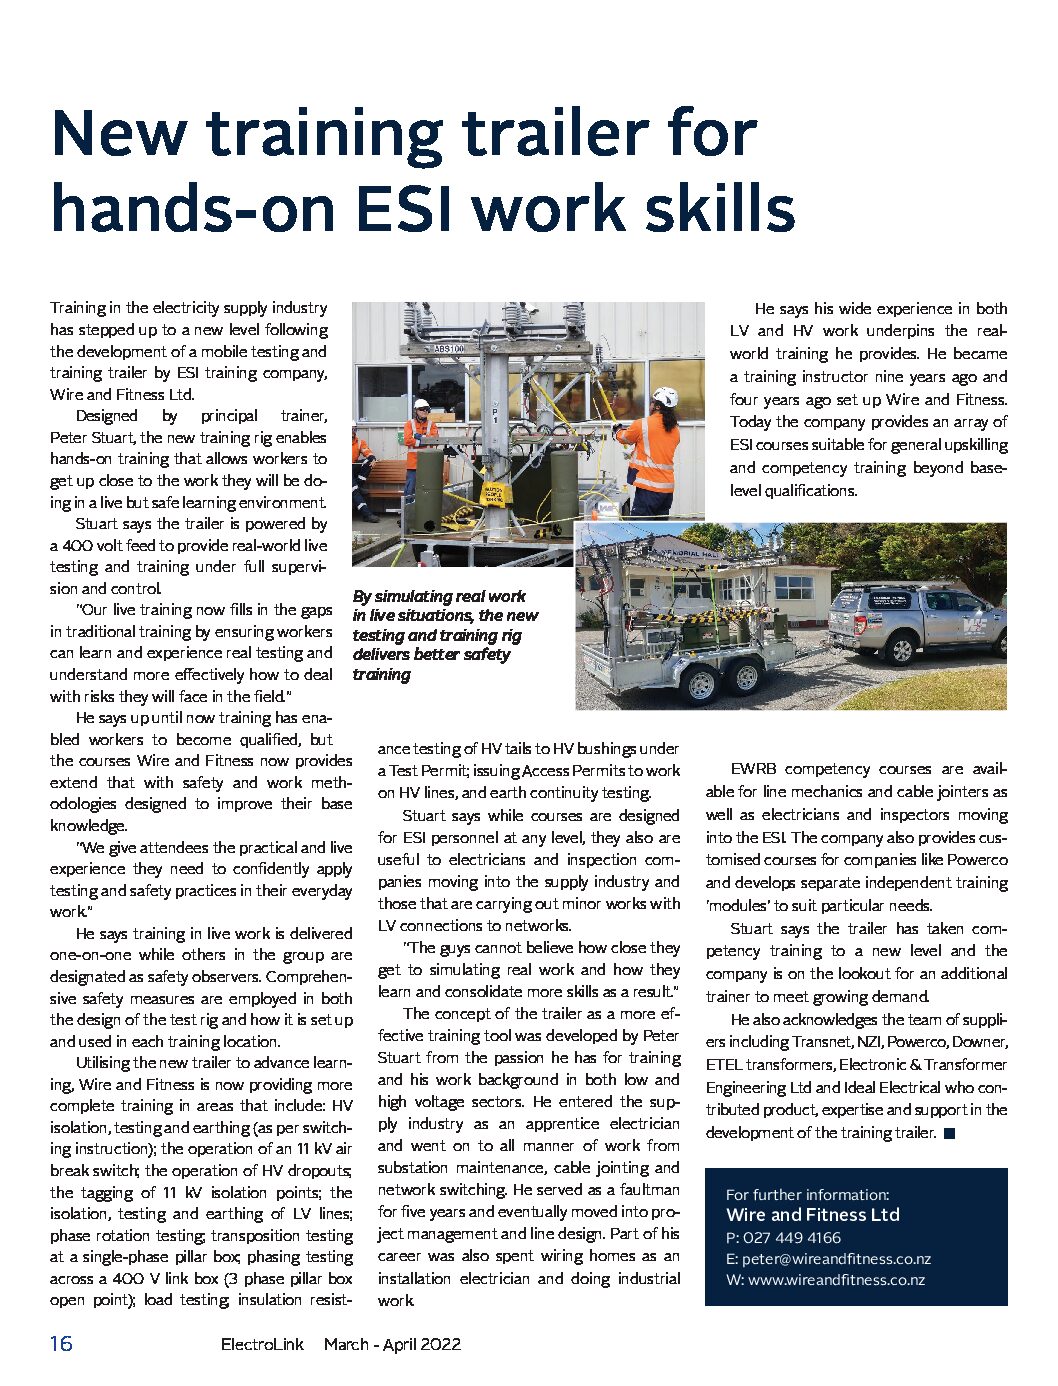 New training trailer for hands-on ESI work skills